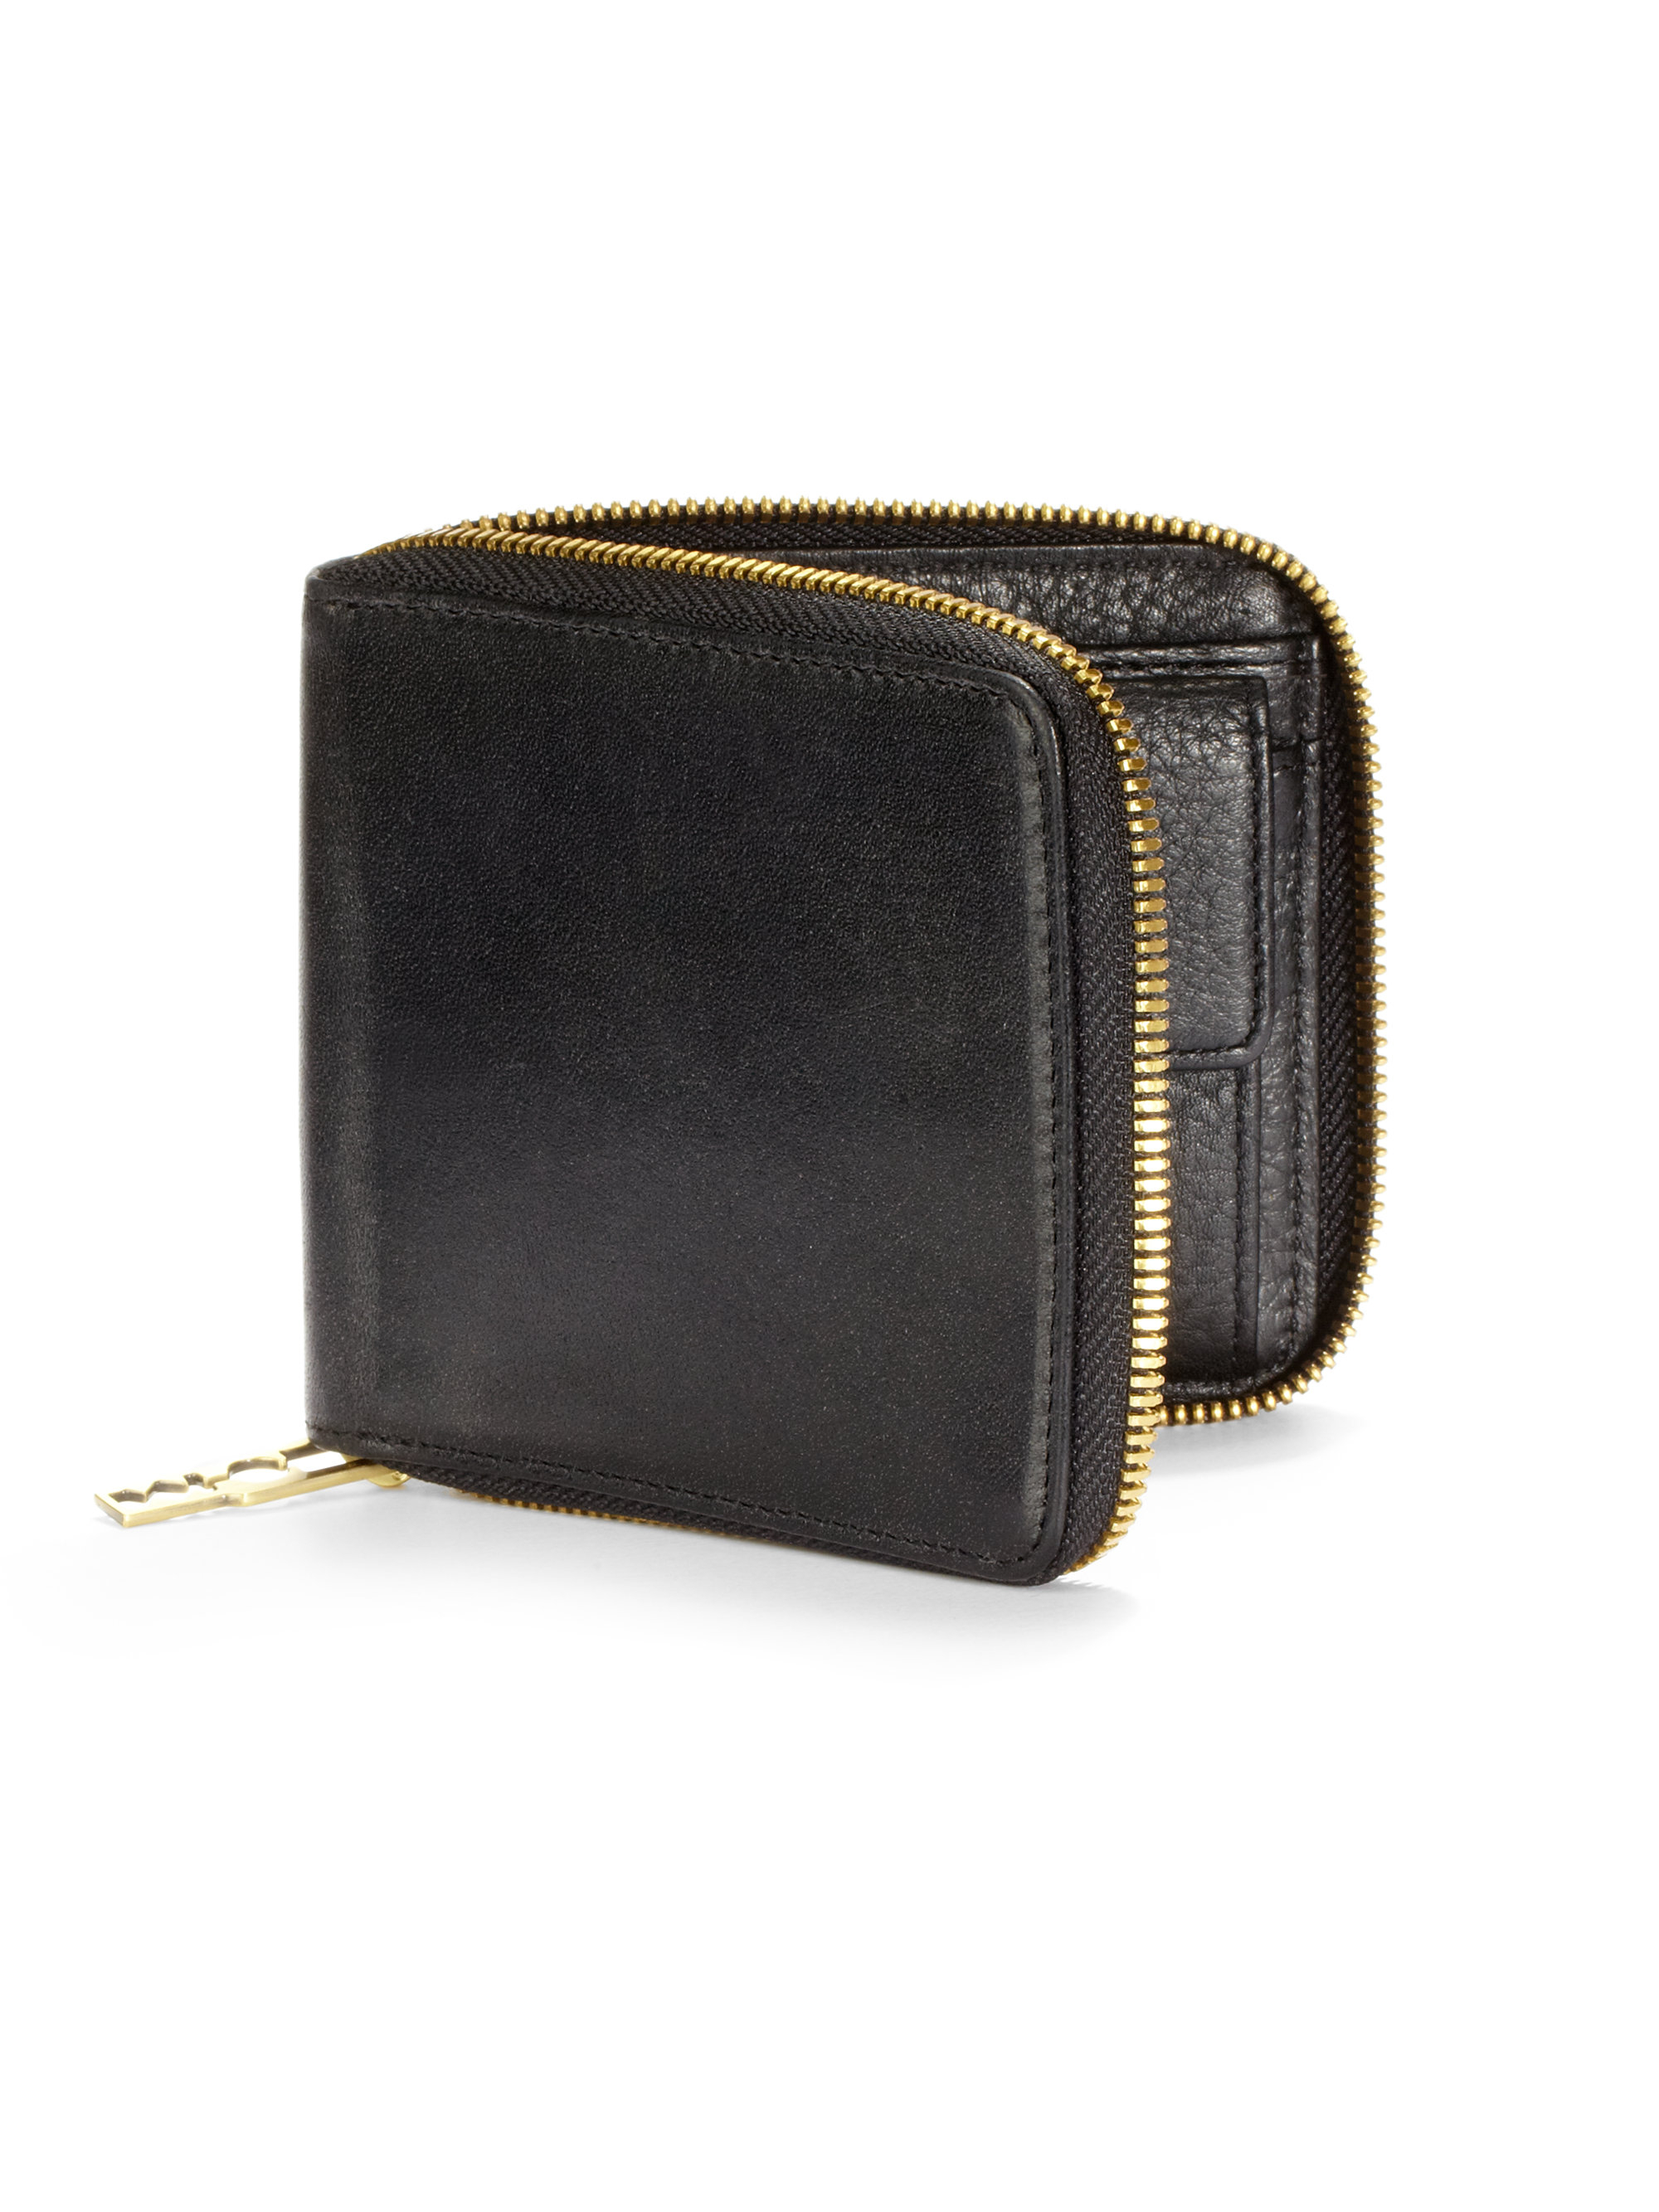 Lyst - Mcq Leather Zip Around Wallet in Black for Men